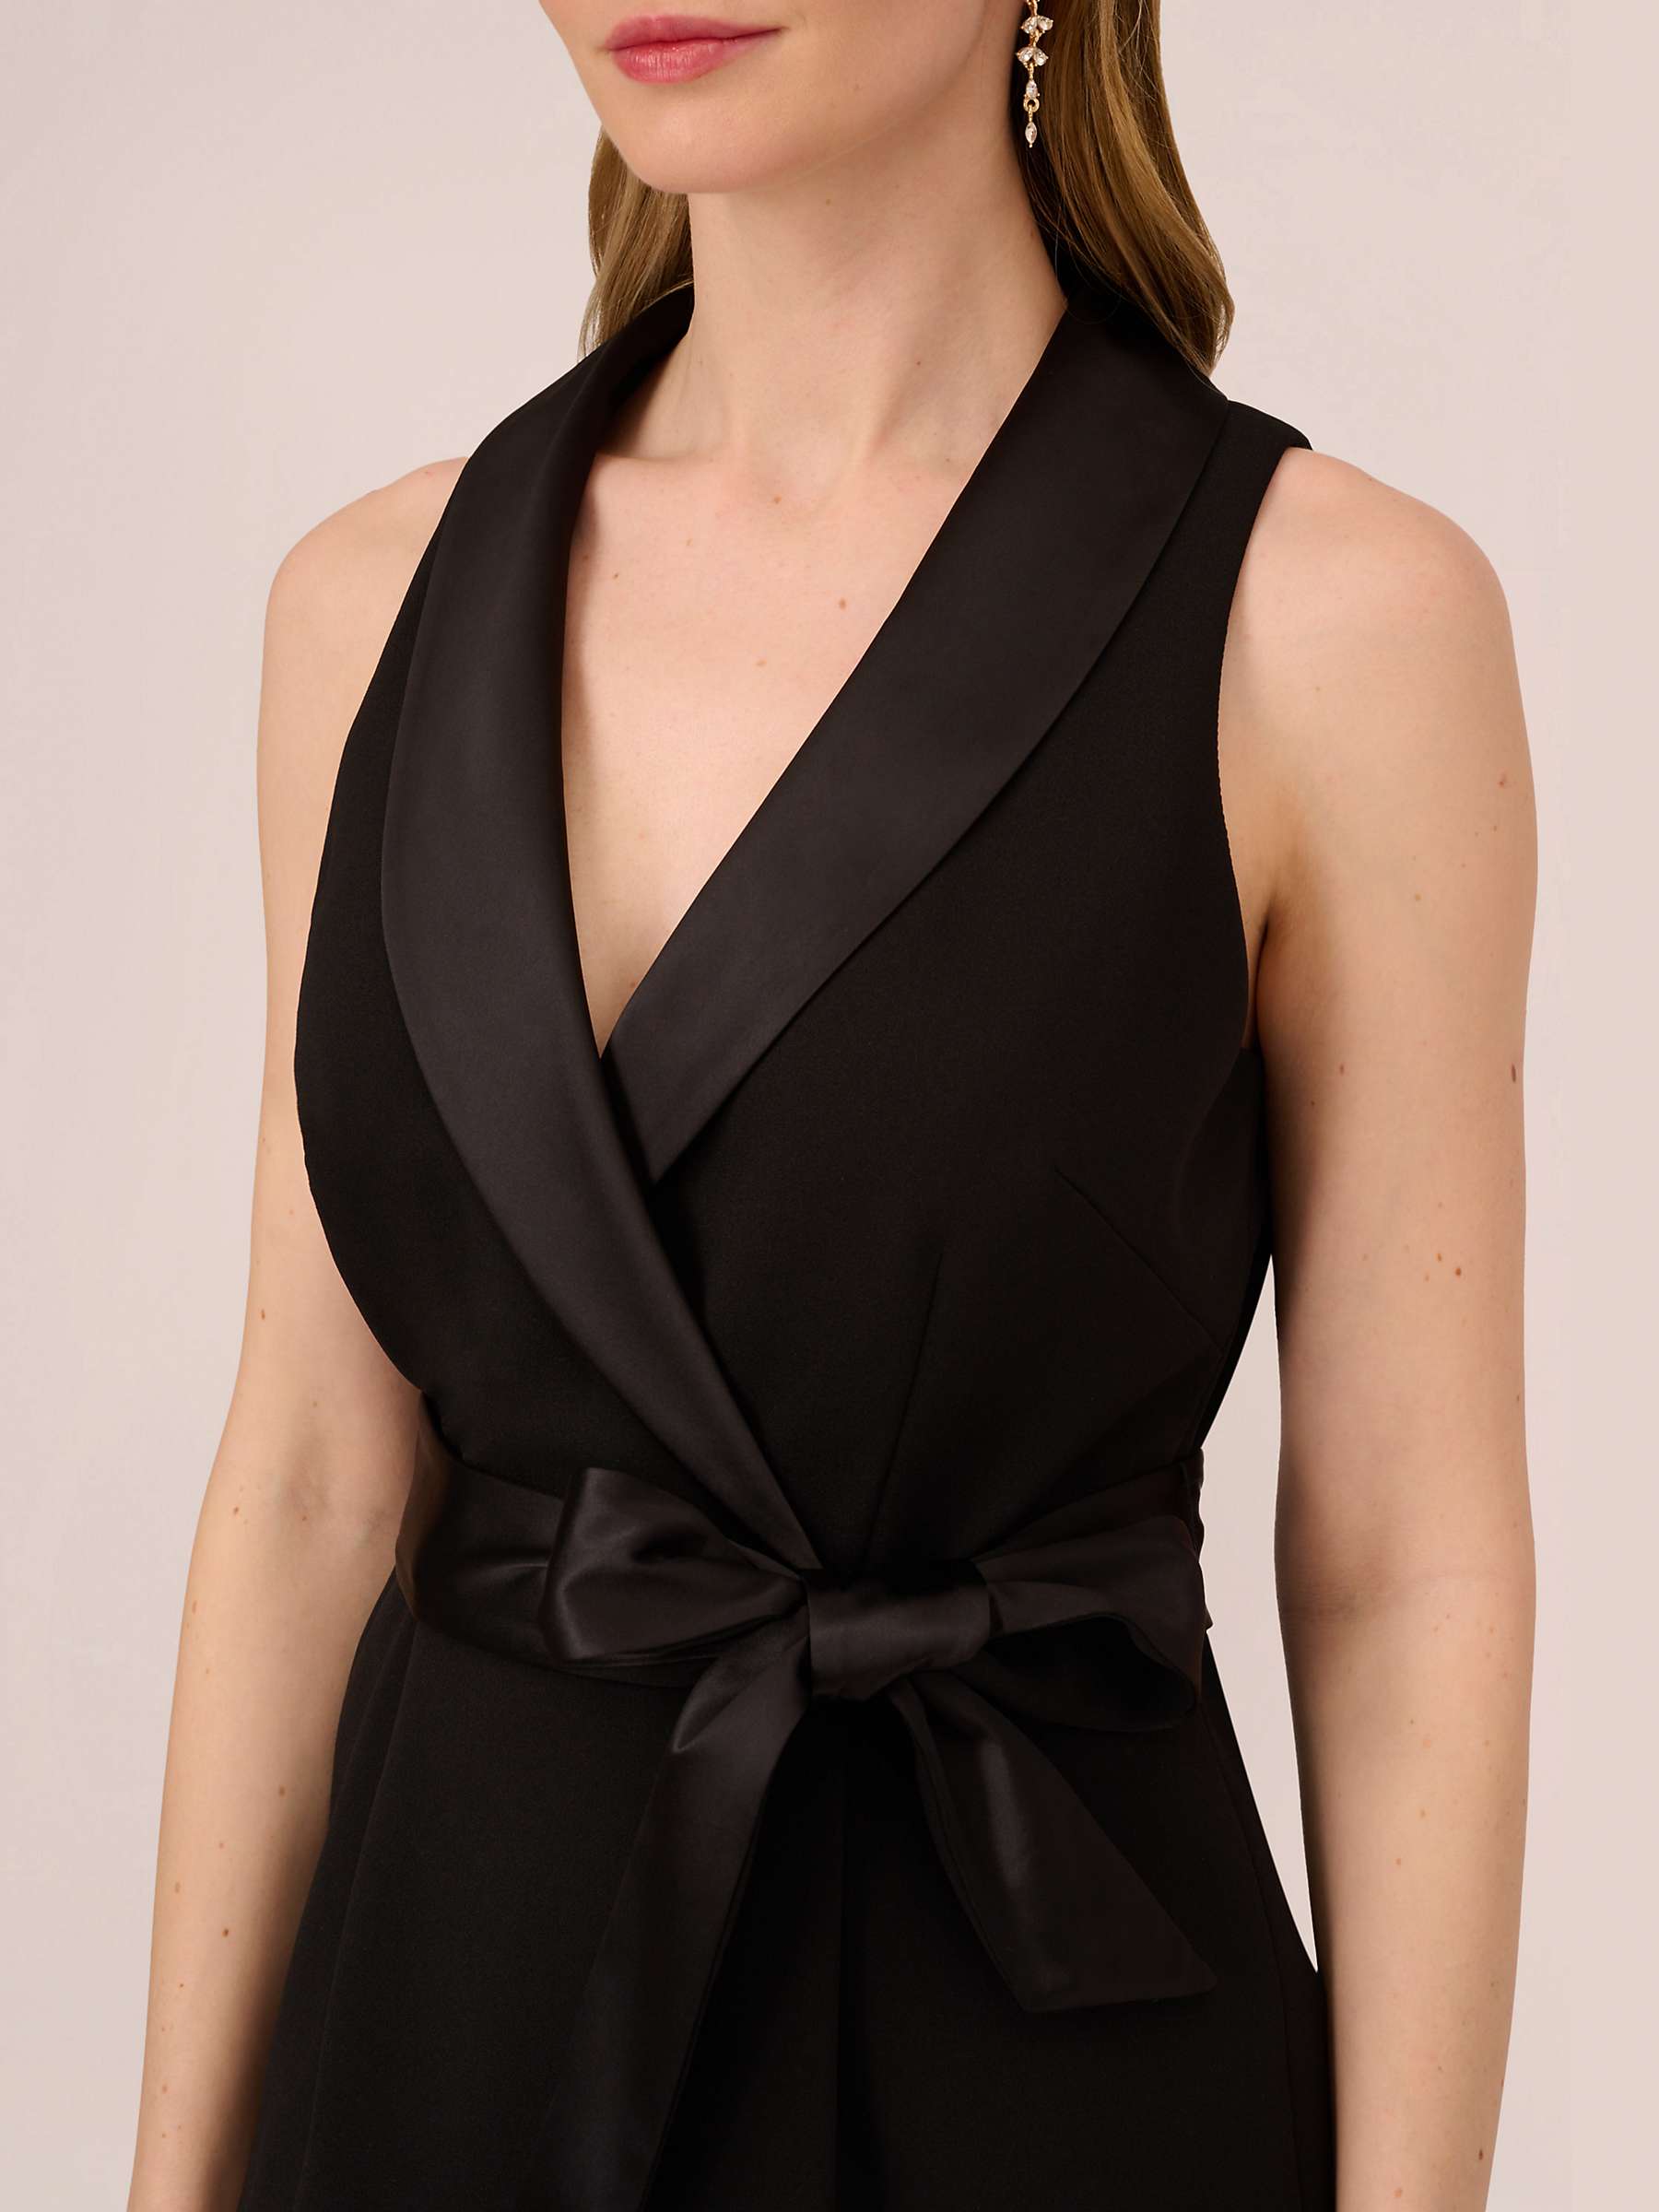 Buy Adrianna Papell Crepe Tuxedo Top, Black Online at johnlewis.com